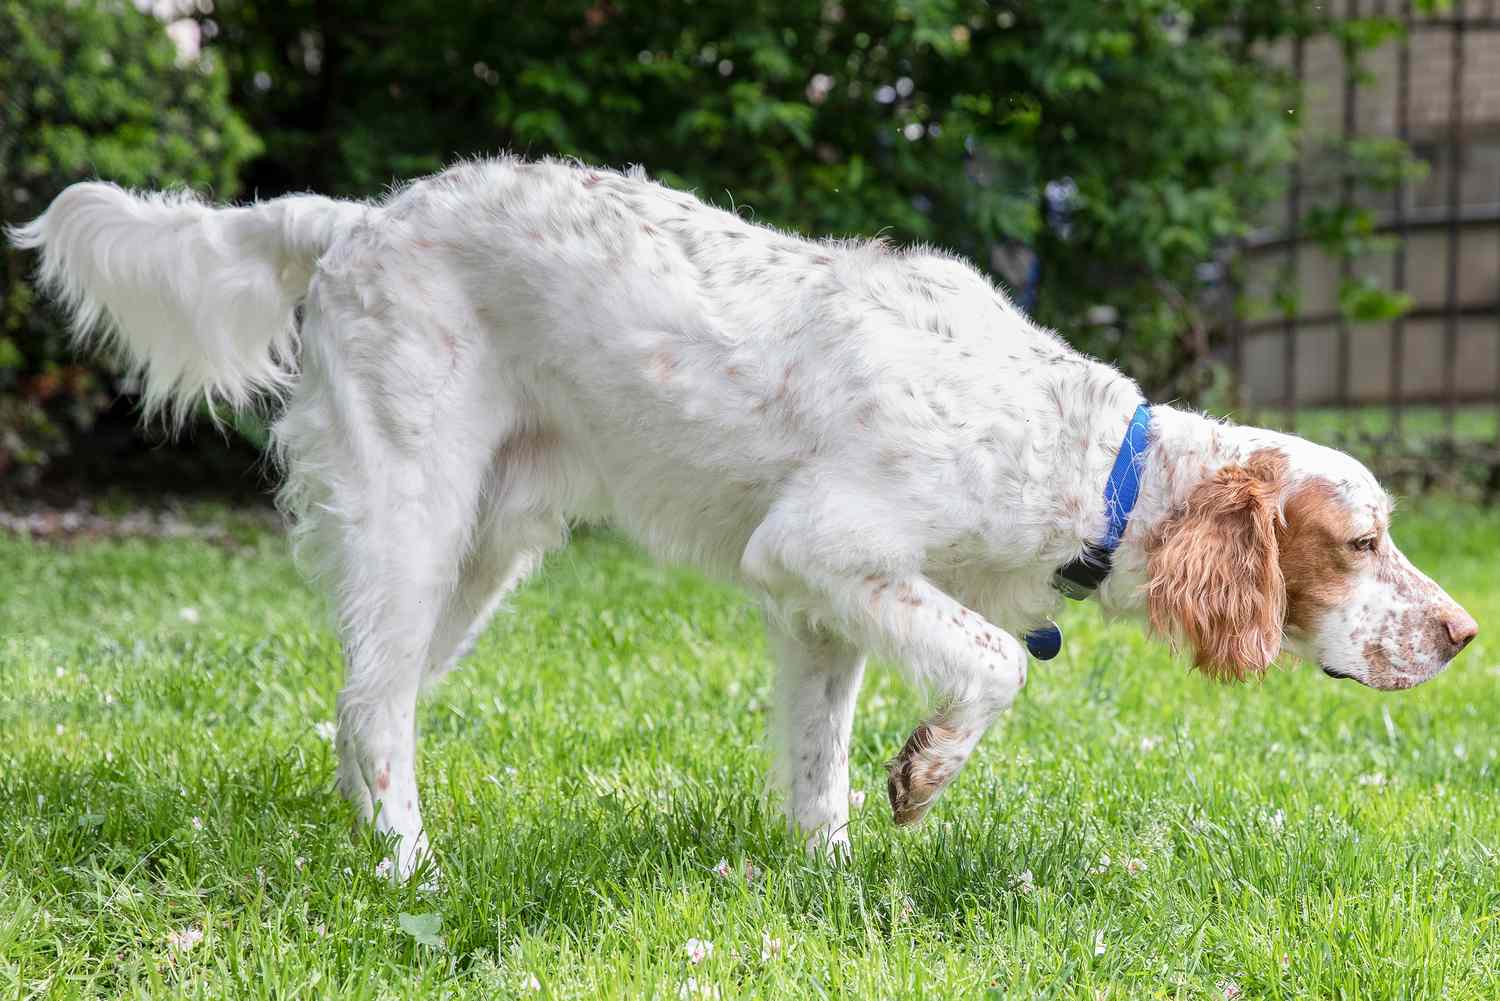 White and tan English Setter dog walking on grass